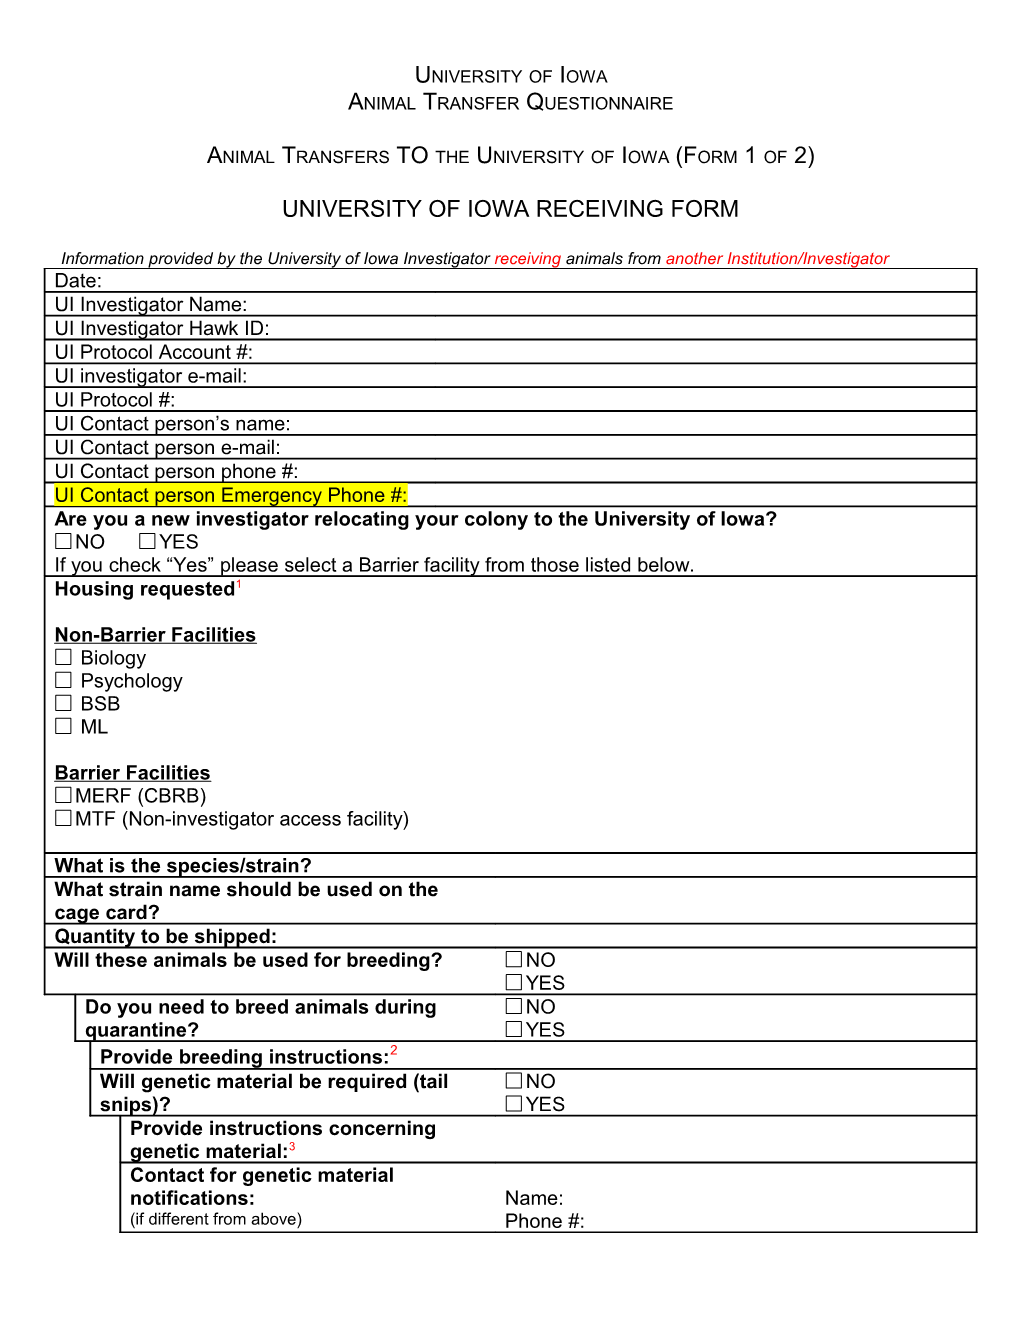 Animal Transfers to the University of Iowa (Form 1 of 2)